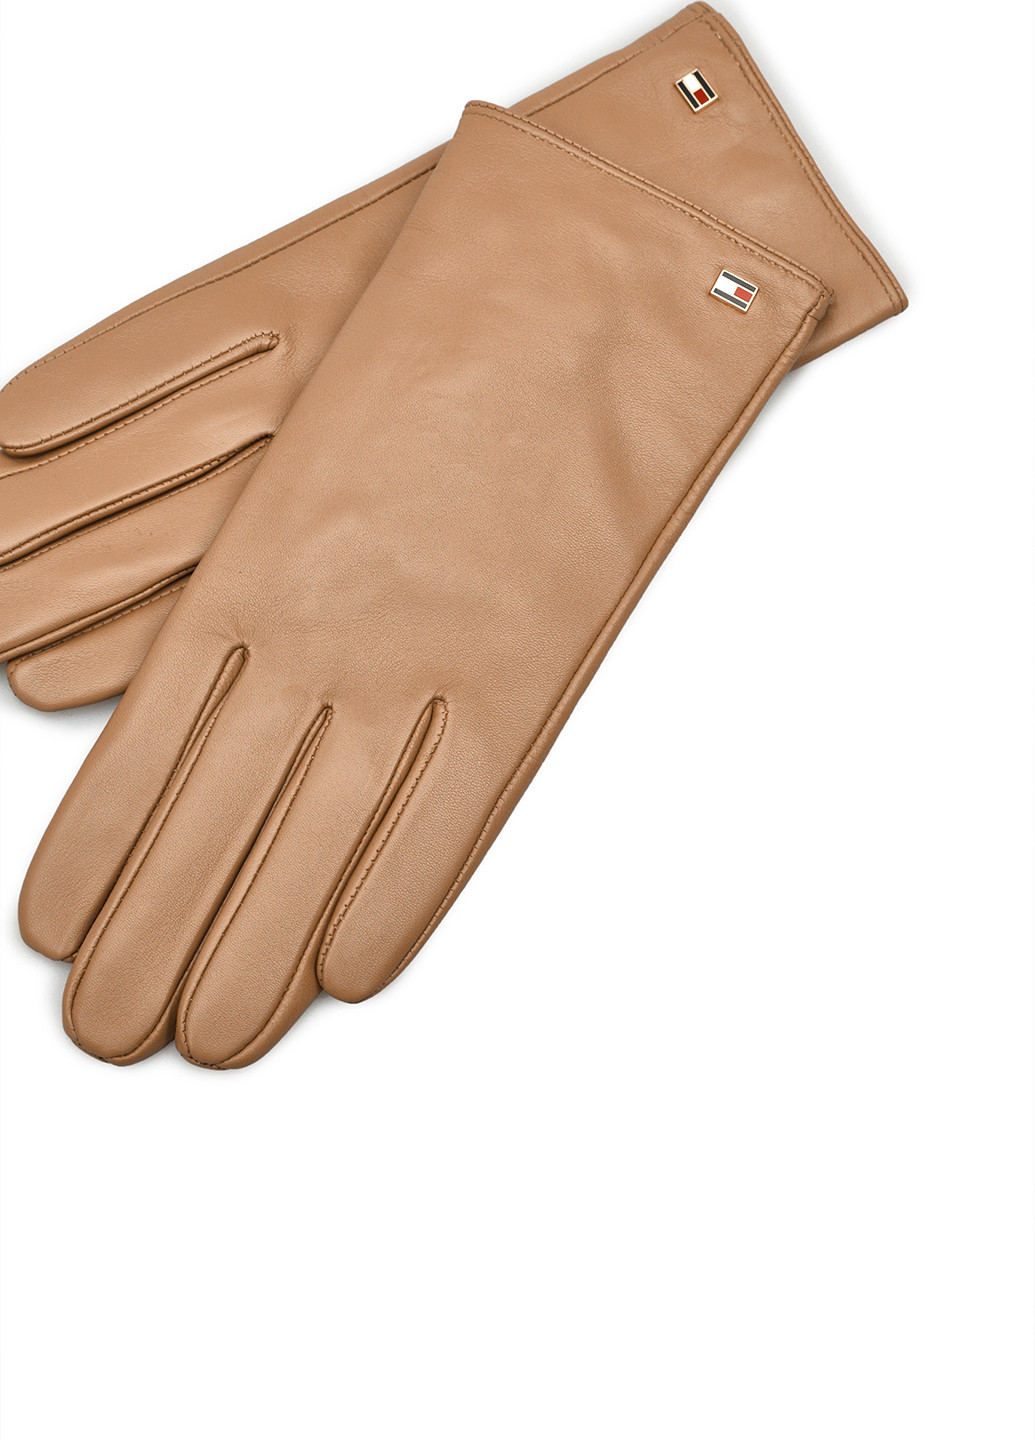 Перчатки Tommy Hilfiger однотонные бежевые кэжуалы натуральная кожа